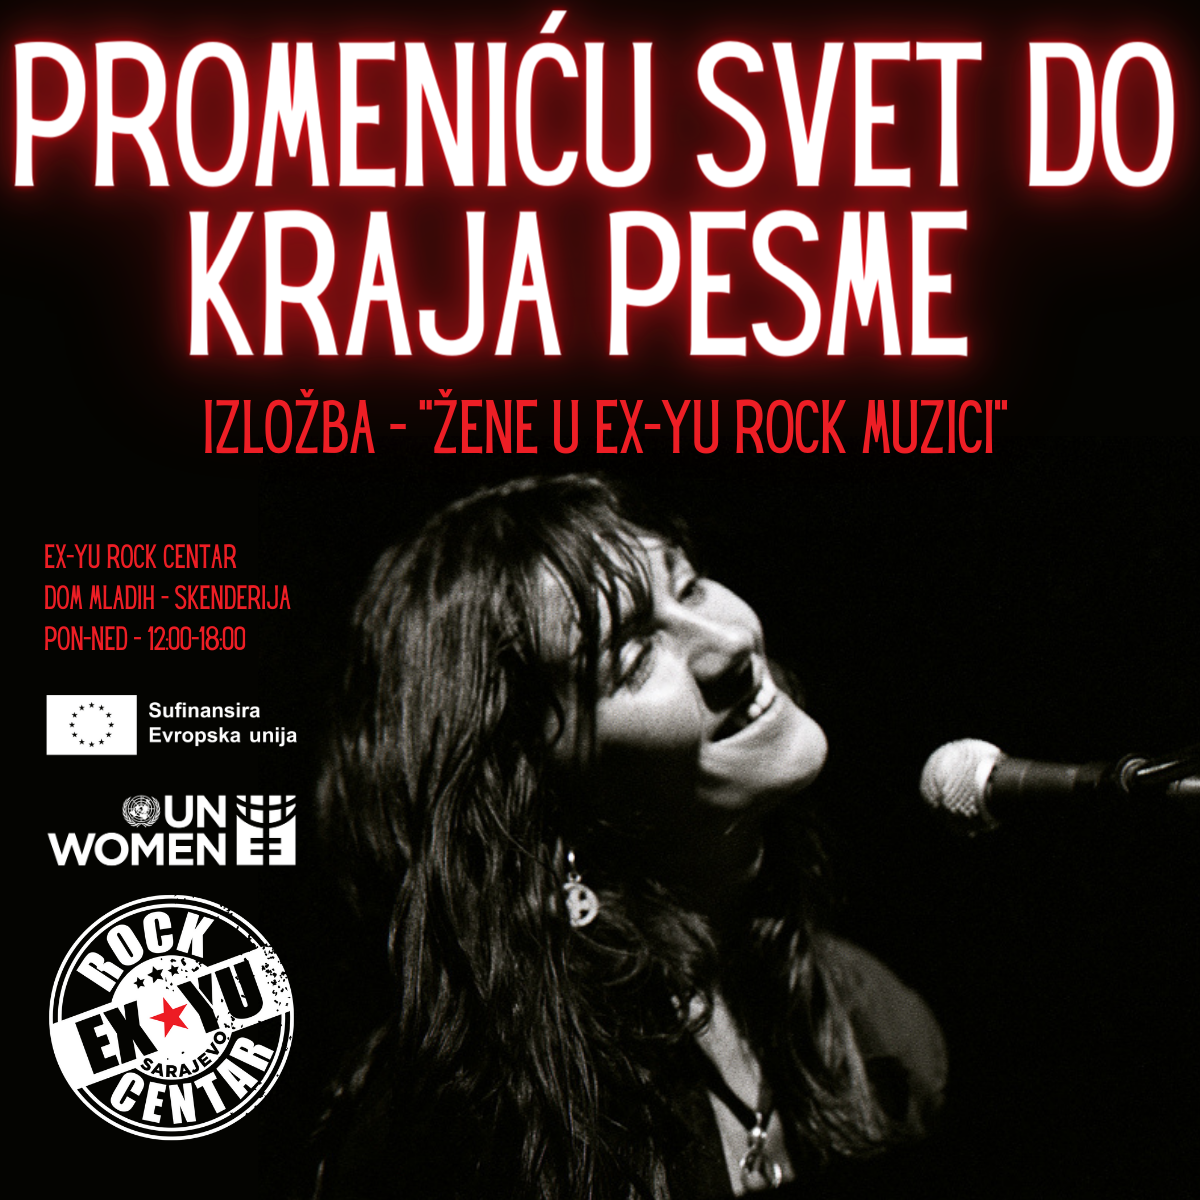 Poster for the exhibition Promeniću svet do kraja pesme